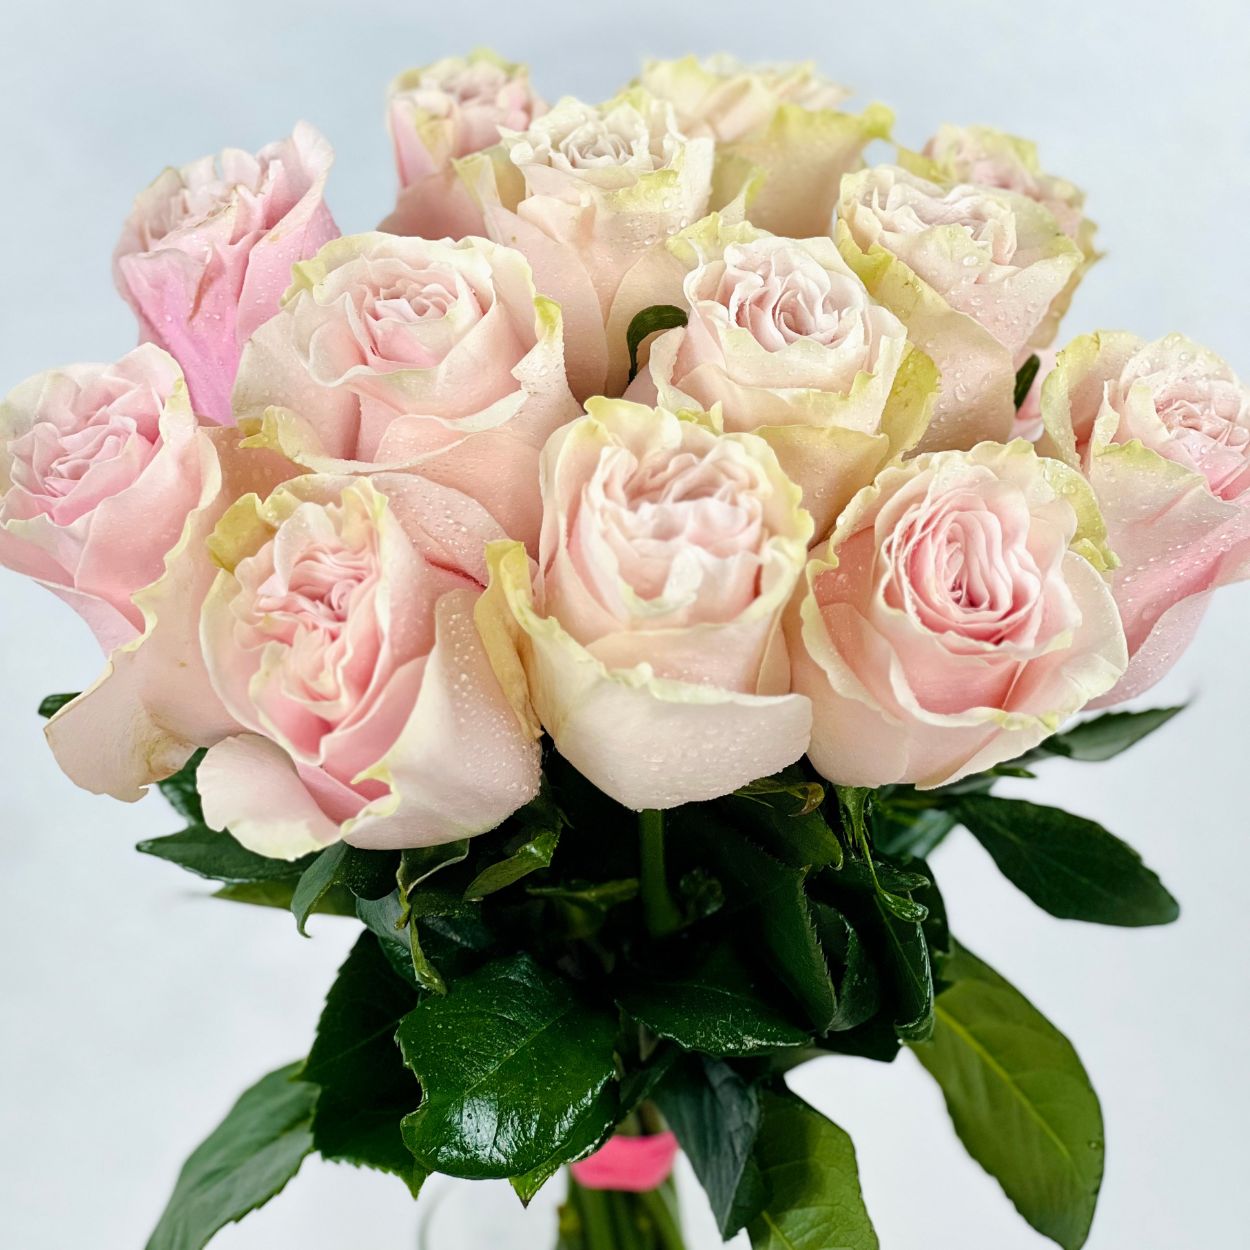 Ramo de rosas de colores - Ramos de flores para regalar - Enviar